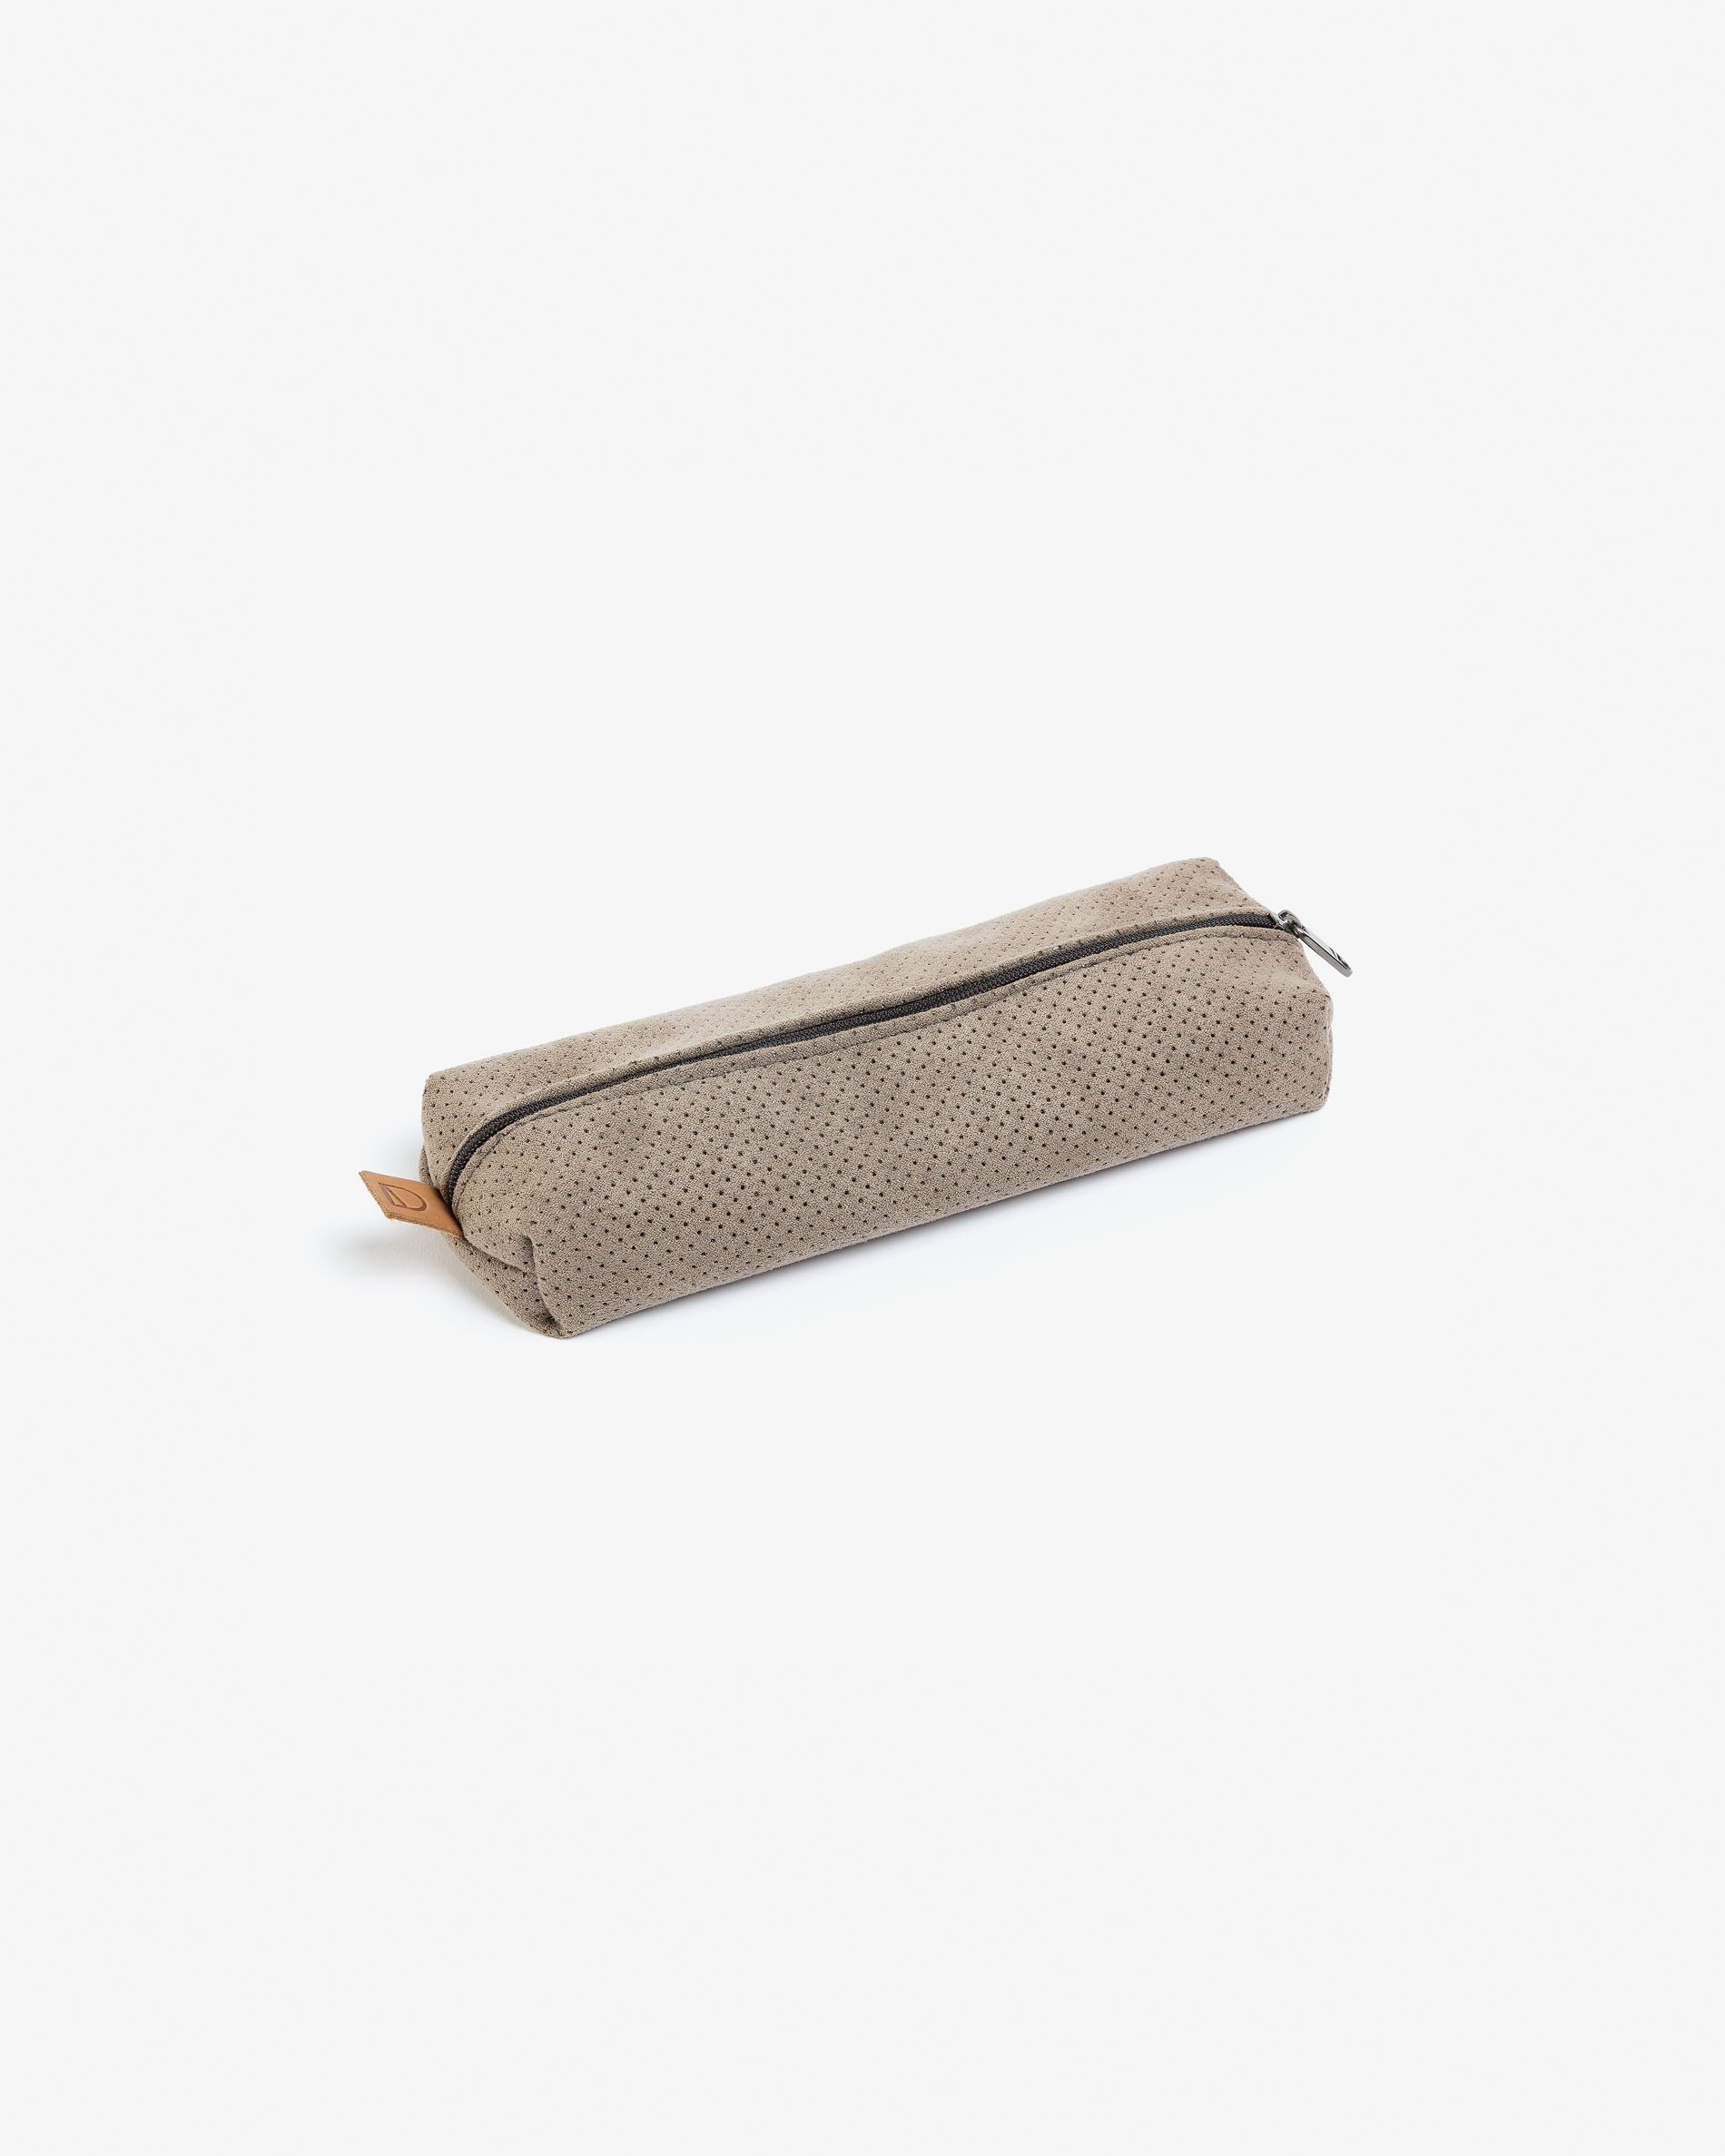 Pencil case Foa taupe fabric with zipper